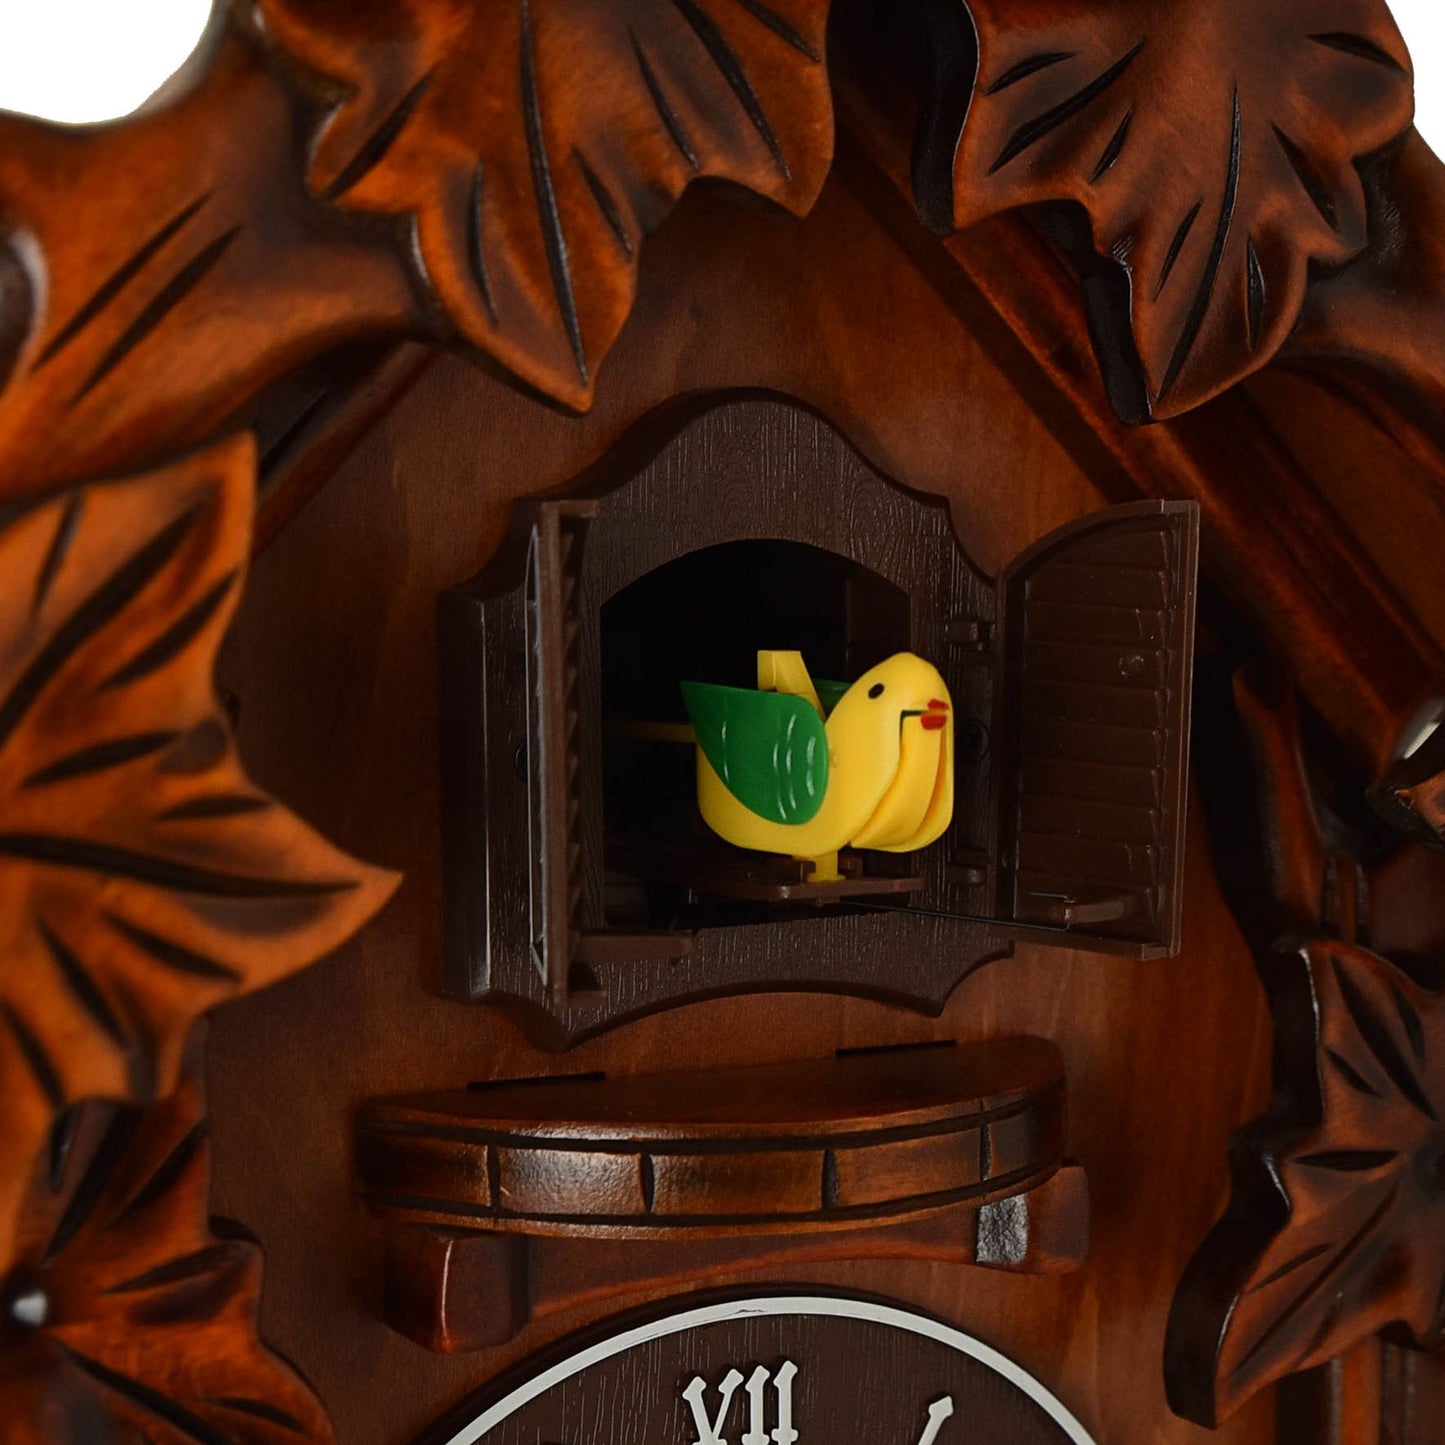 Cuckoo Clock Mahogany Bird on Top Wooden Case - Large